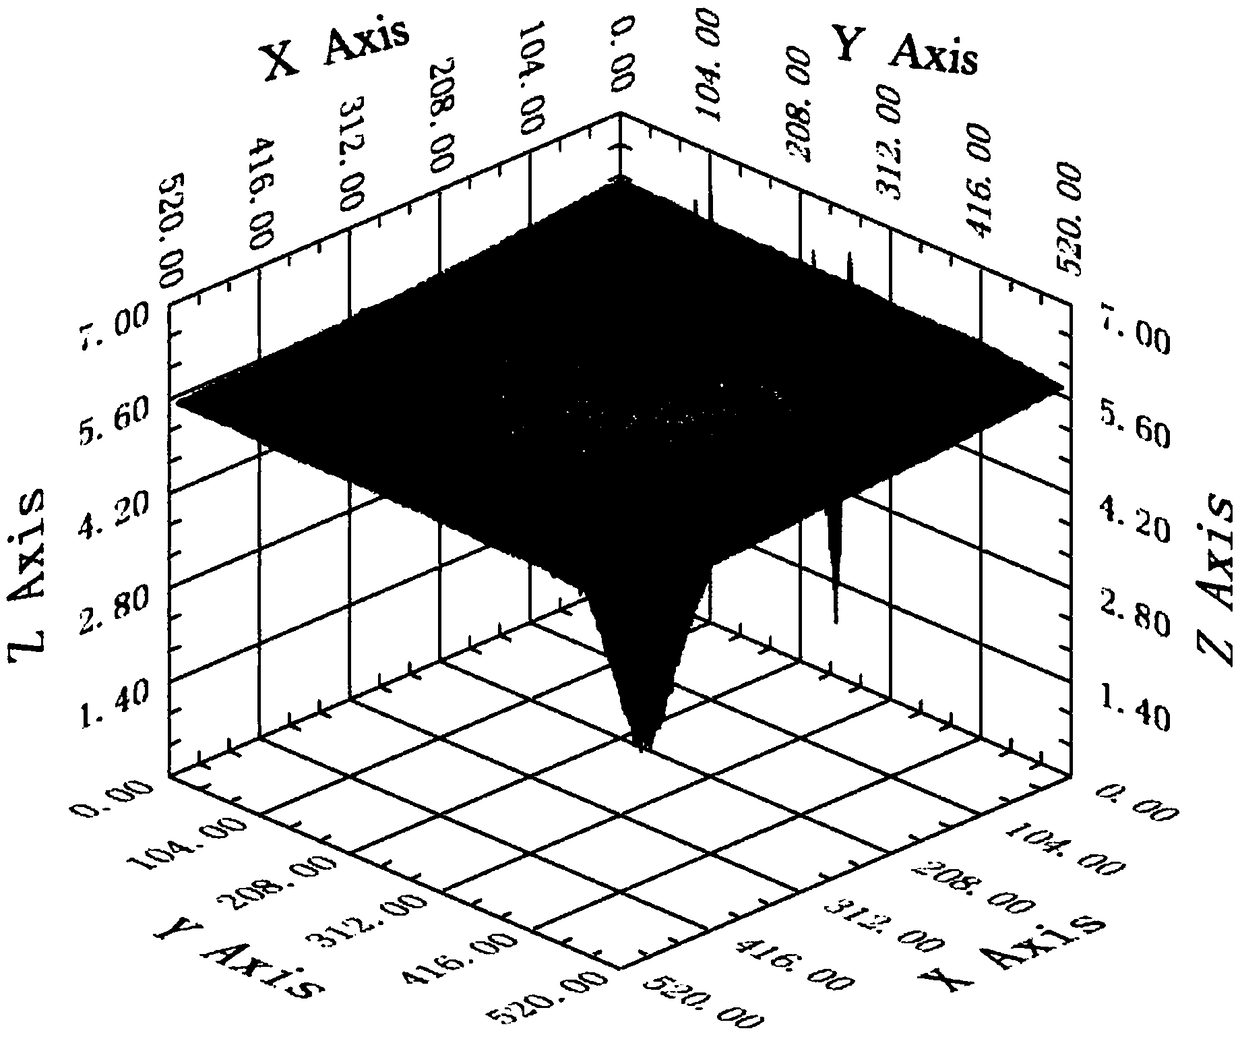 Microhardness indentation measurement method based on confocal principle